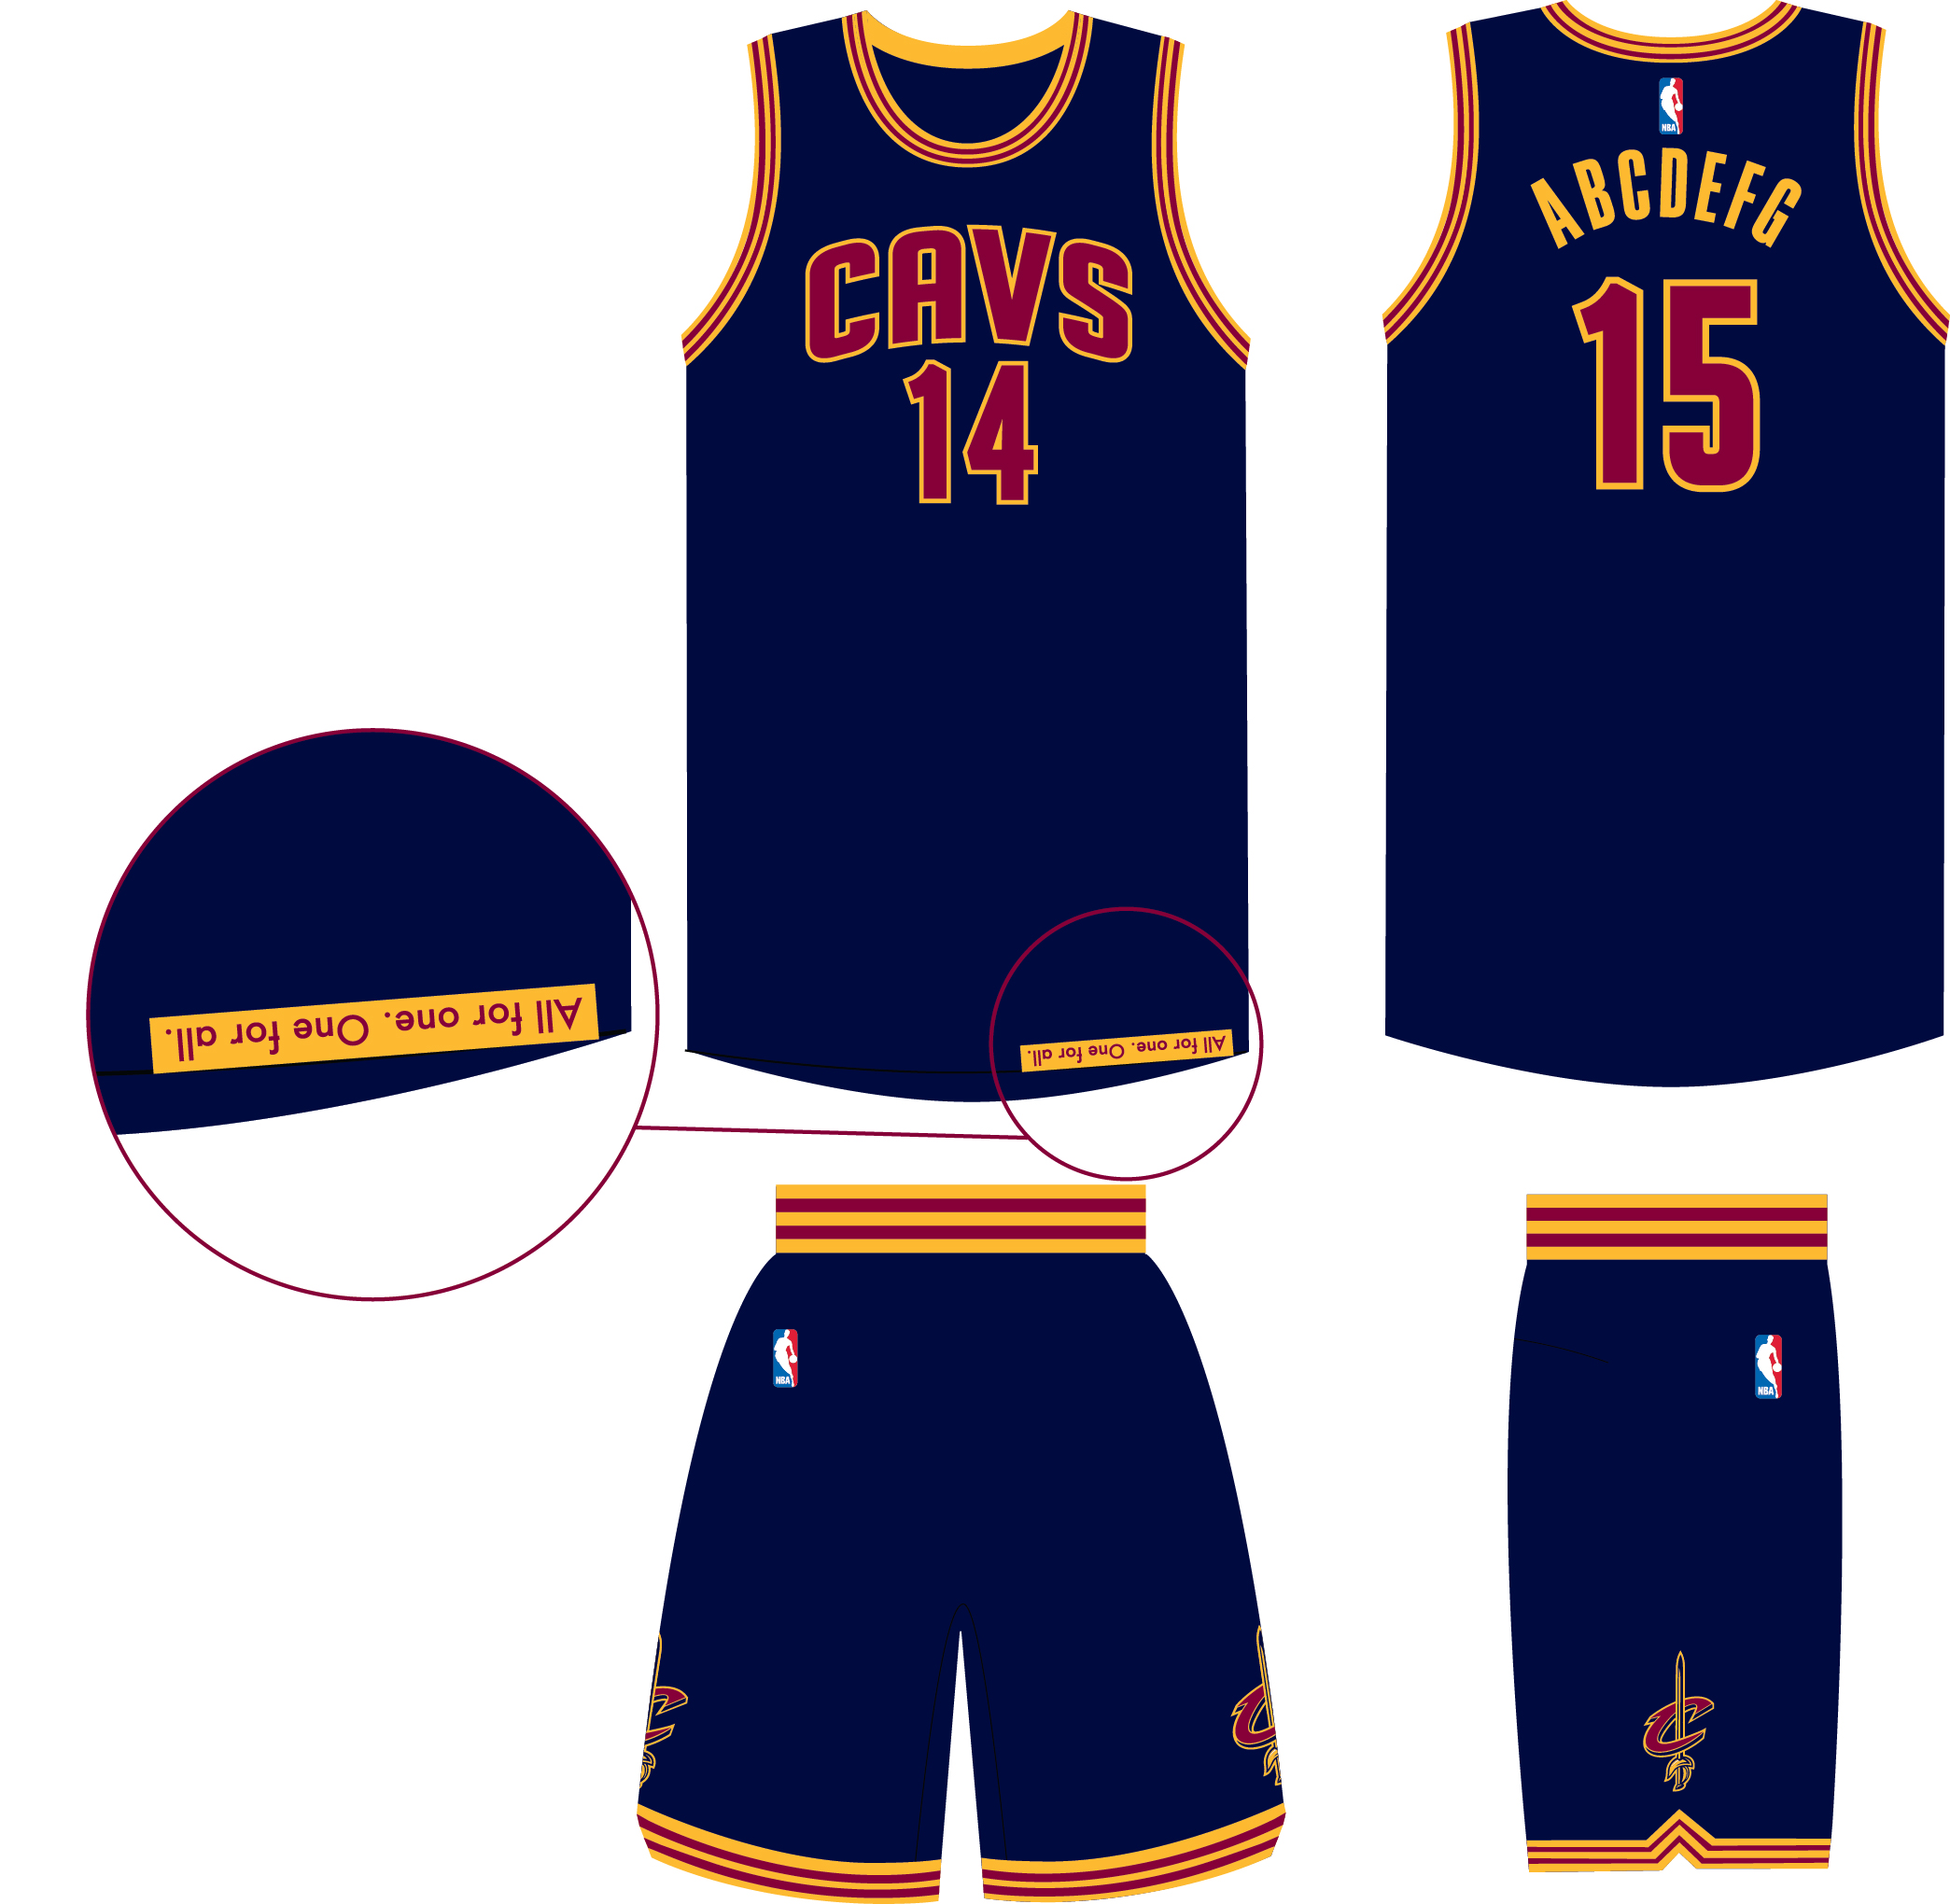 cleveland cavaliers jersey design 2014